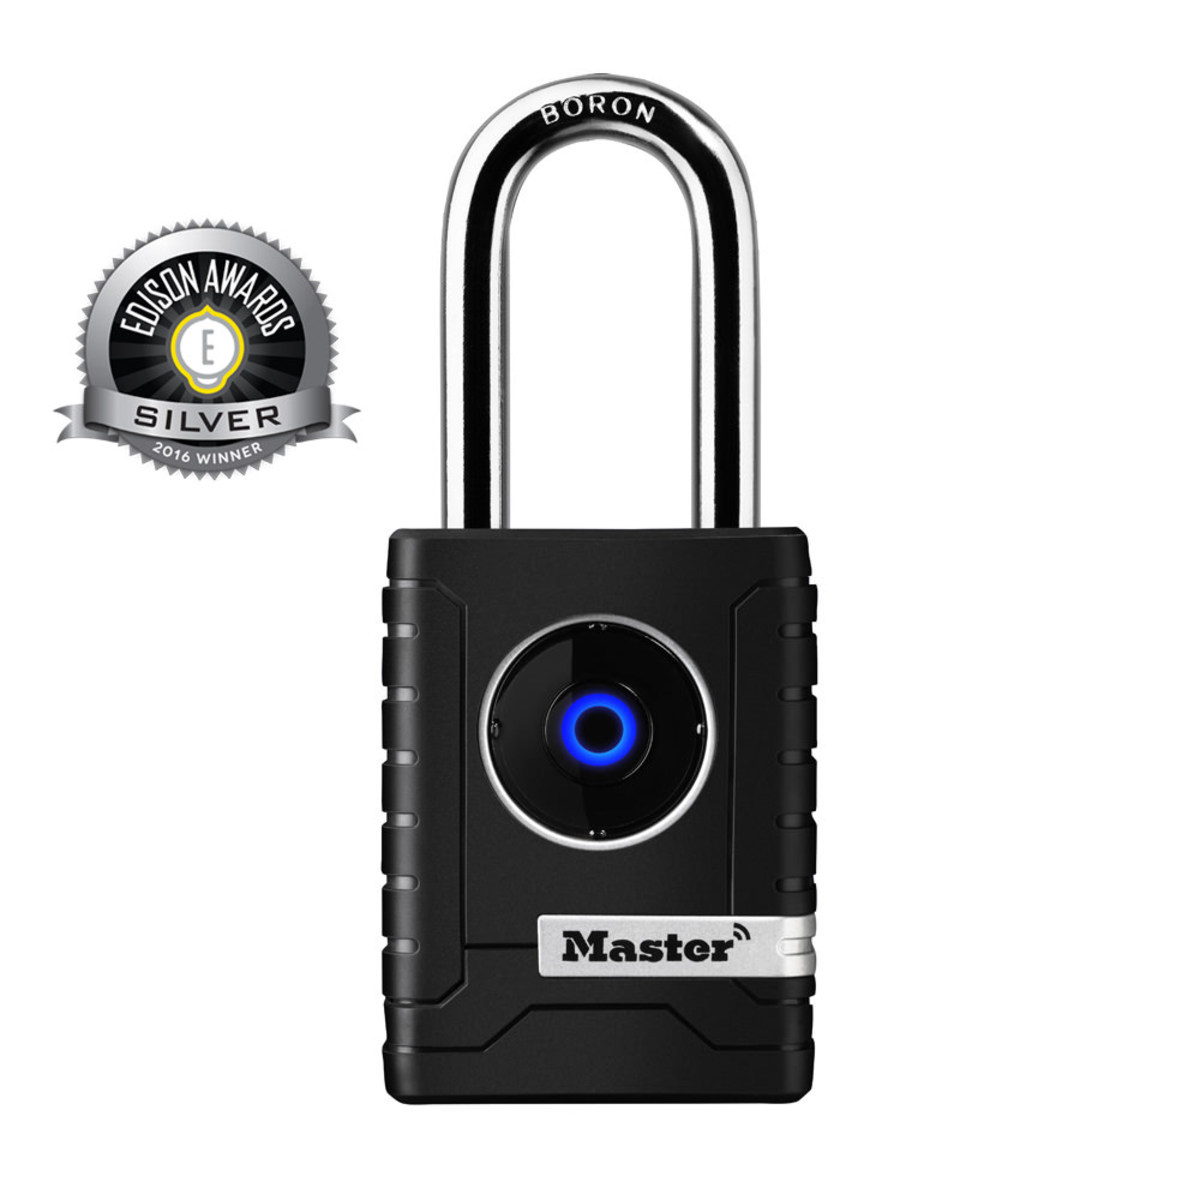 Master Lock® Black Vinyl Covered Metal Electronic Security Padlock Boron Alloy Shackle